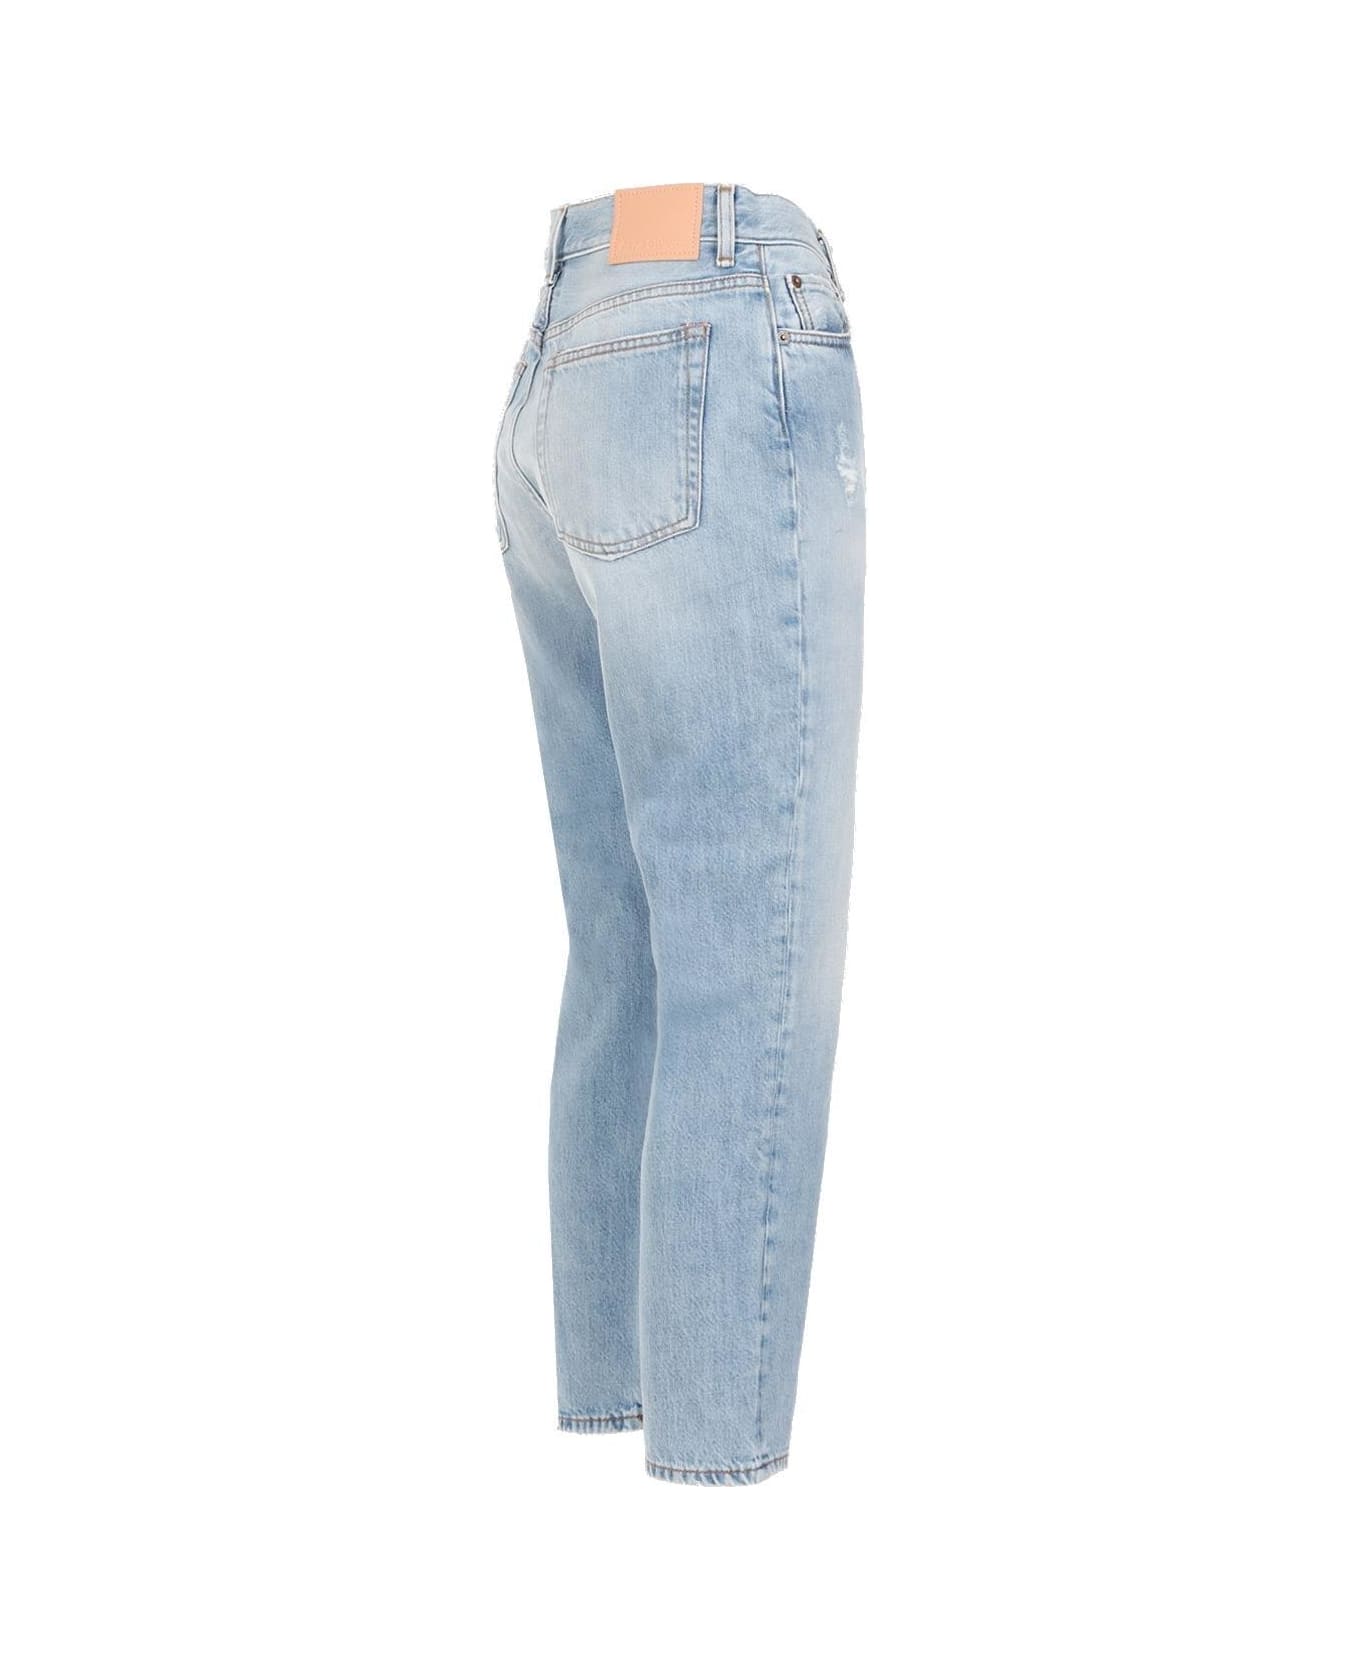 Acne Studios High-waisted Straight-leg Jeans - Light blue デニム